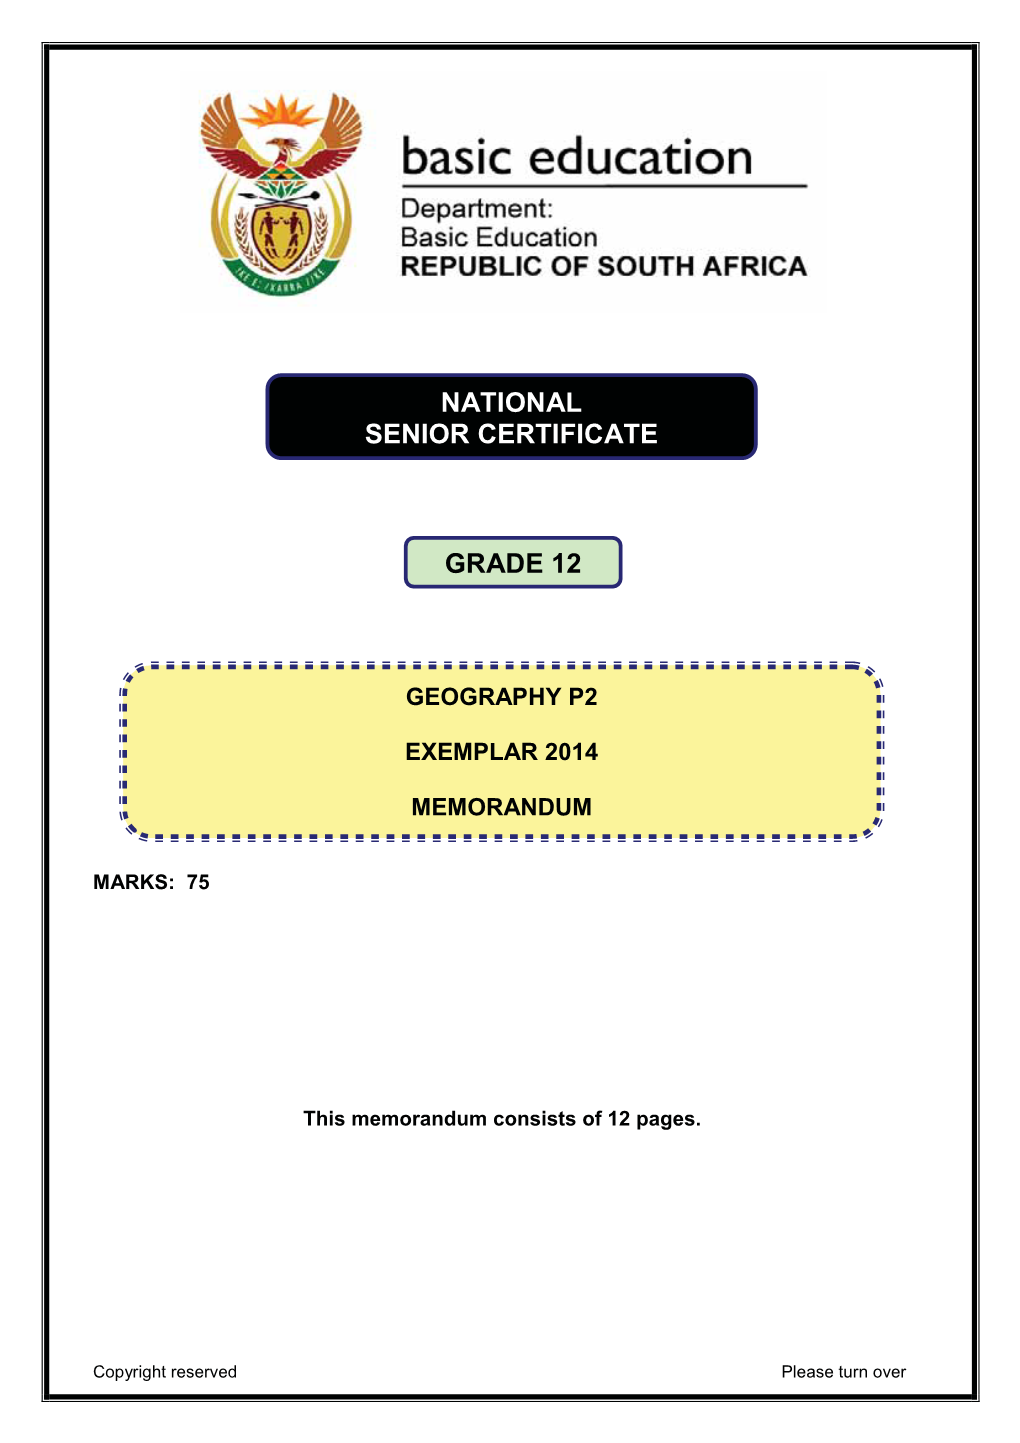 National Senior Certificate Grade 12